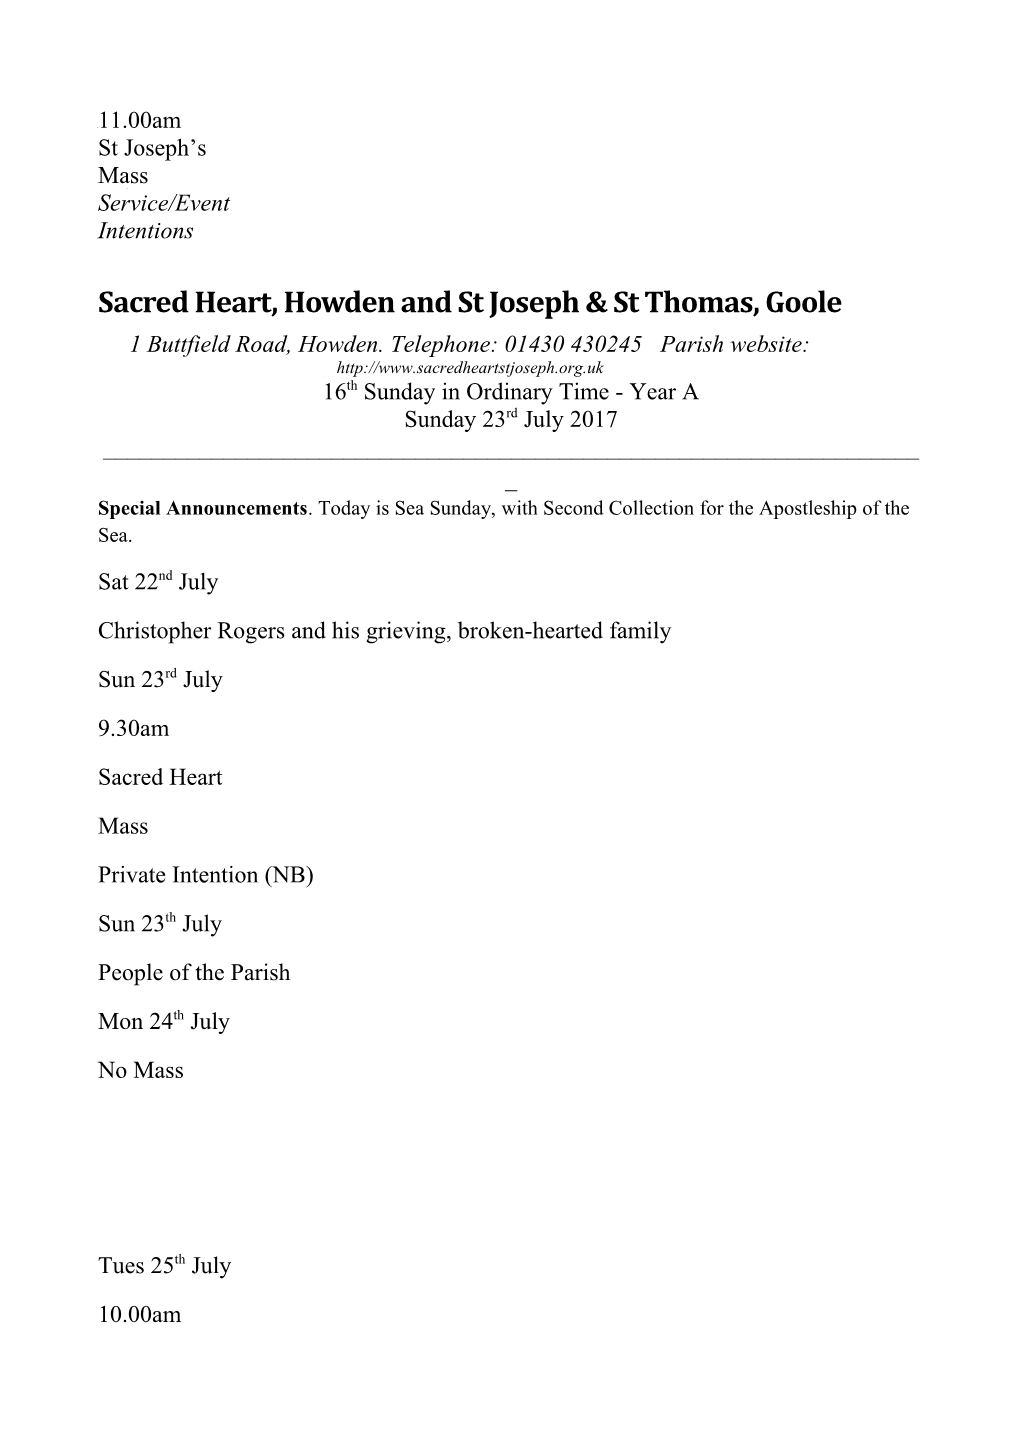 Sacred Heart, Howden and St Joseph & St Thomas, Goole